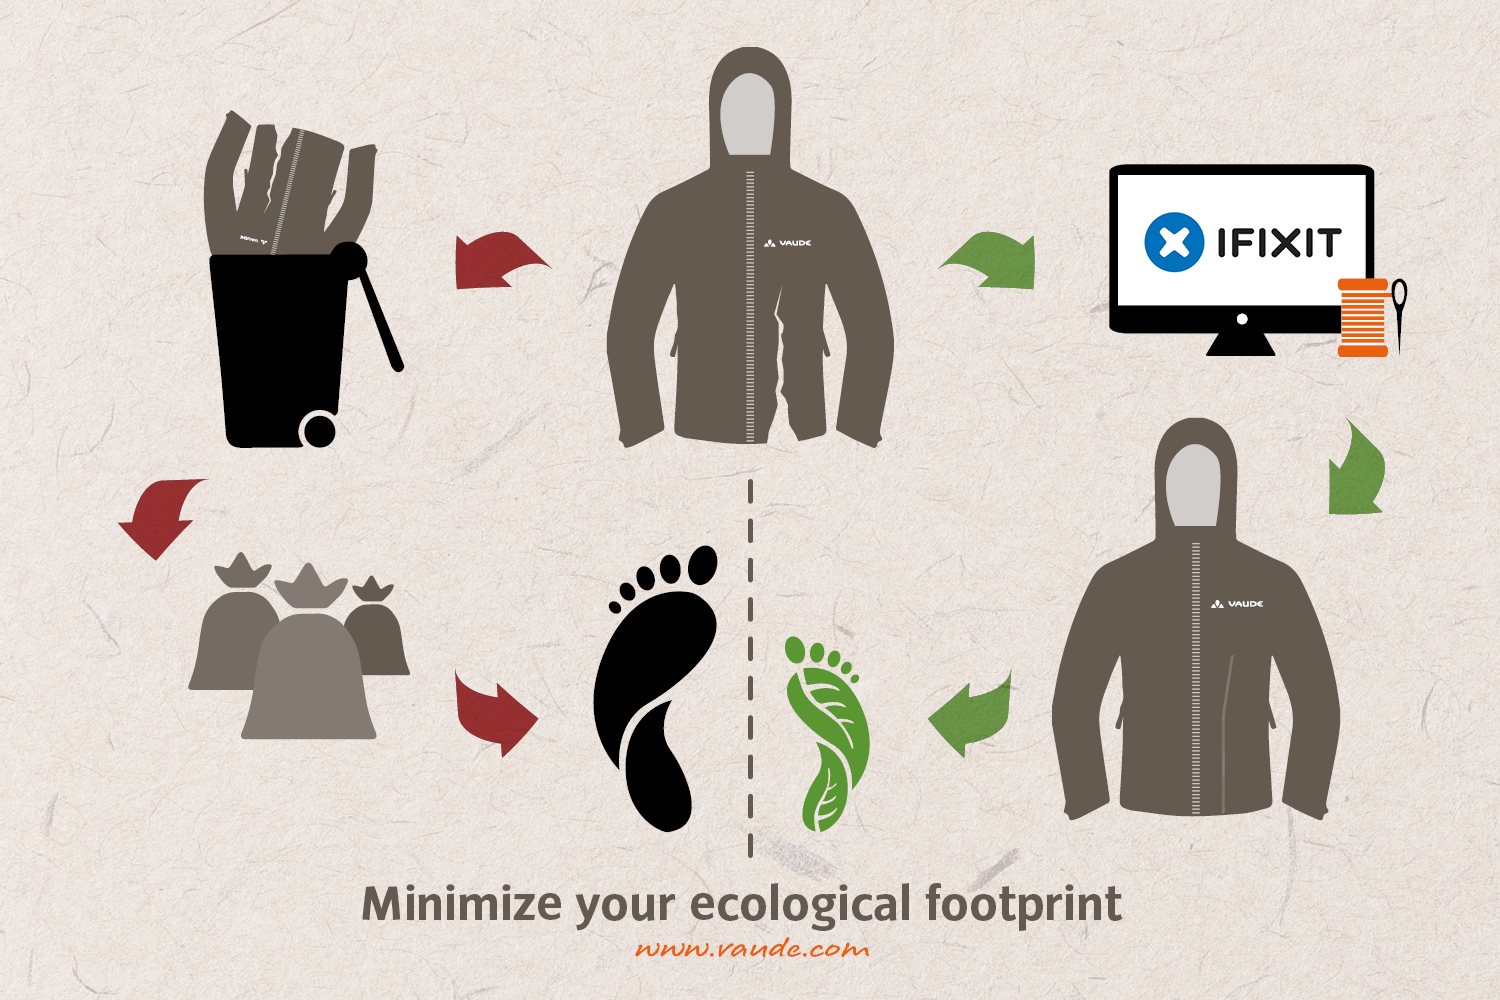 Minimize your ecological footprint